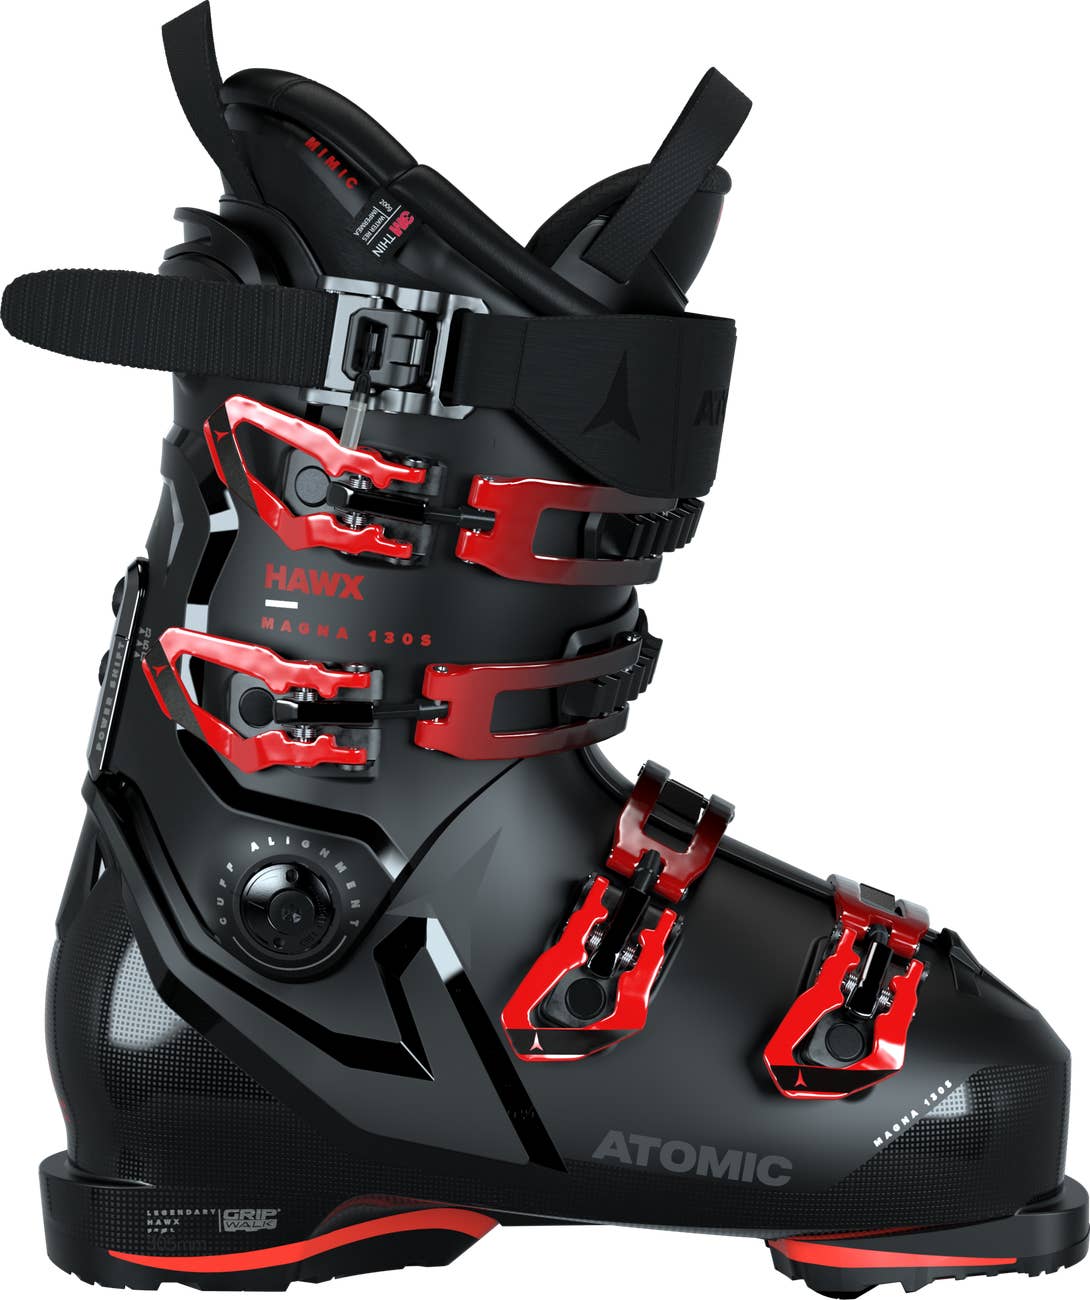 Atomic Hawx Magna 130 S Ski Boot Mens - Black/Red